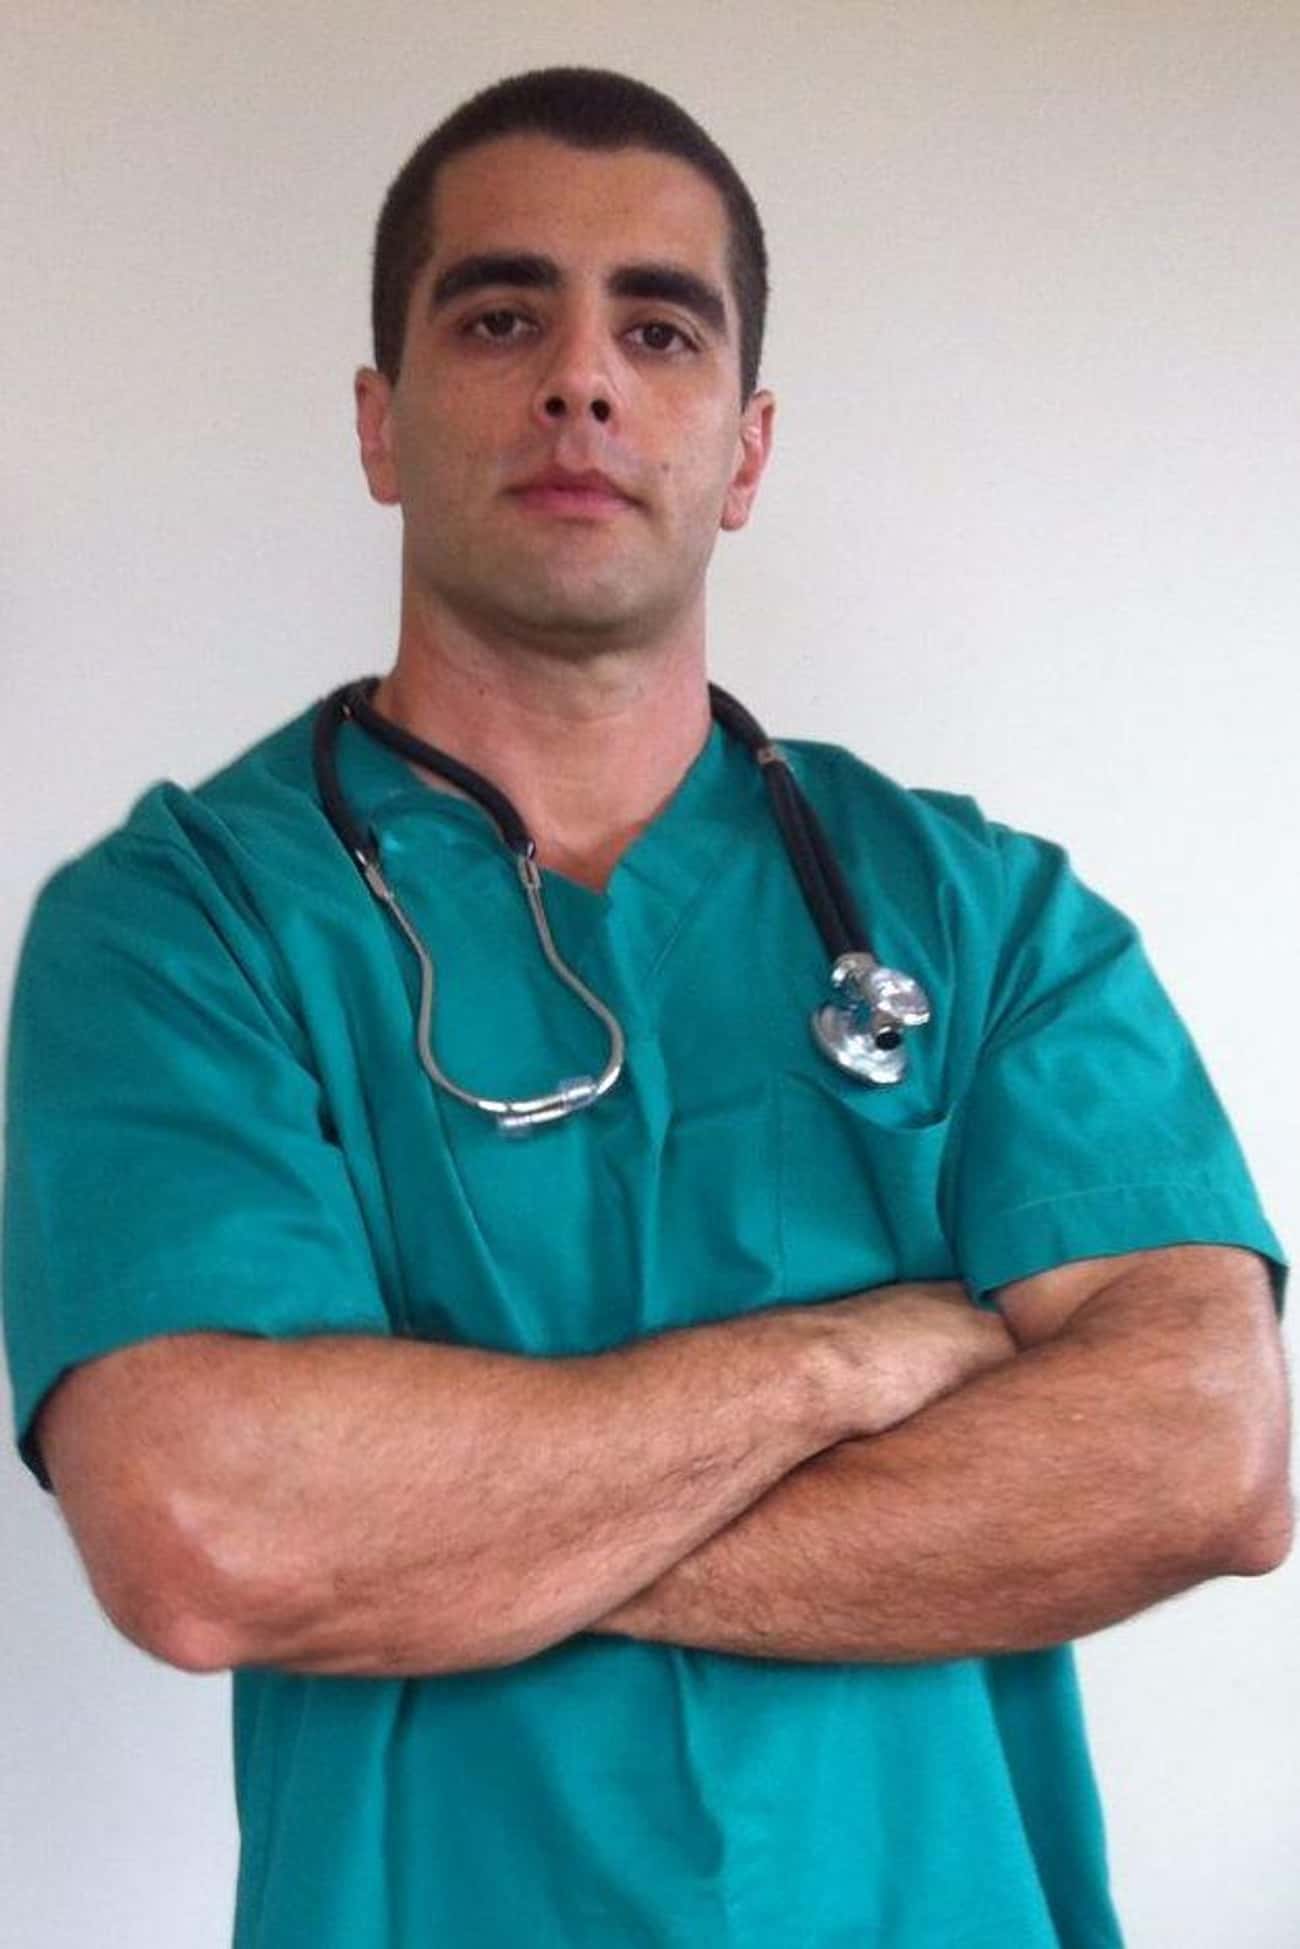 Dr. Denis Furtado Performed Procedures In His Apartment